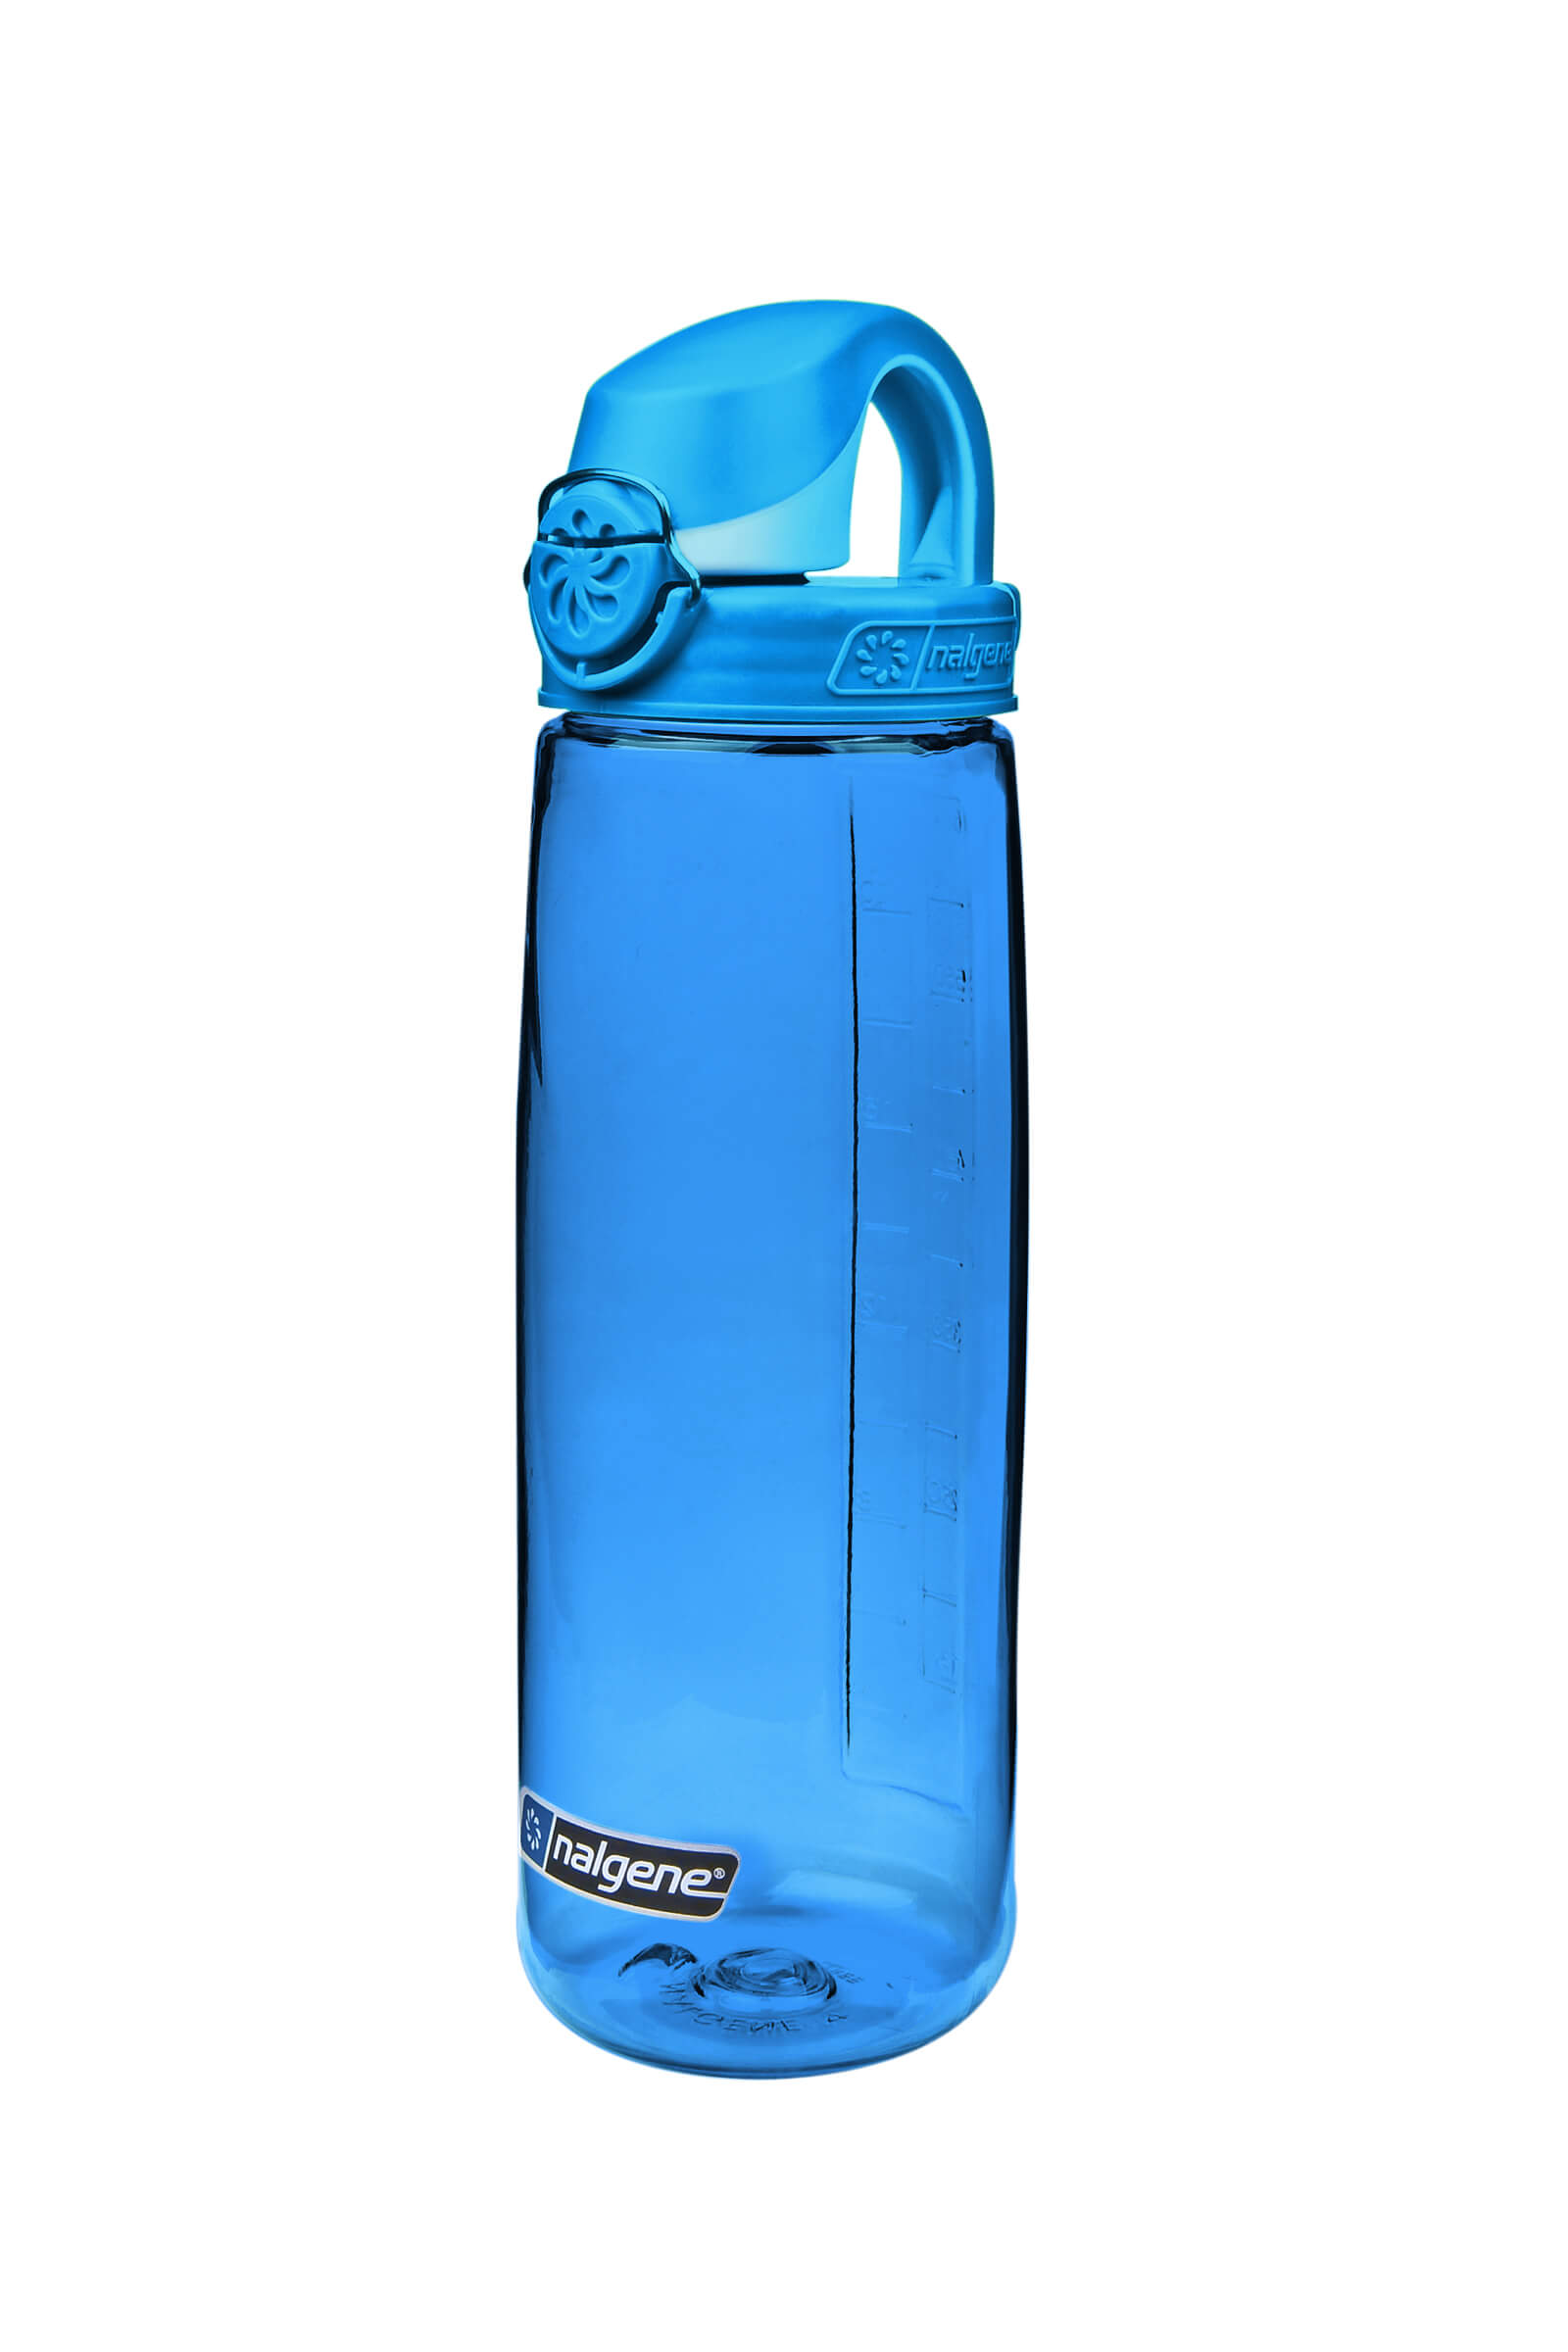 NEW Nalgene “On The Fly” Water Bottle BPA Free Travel Sports 24 OZ Leakproof 